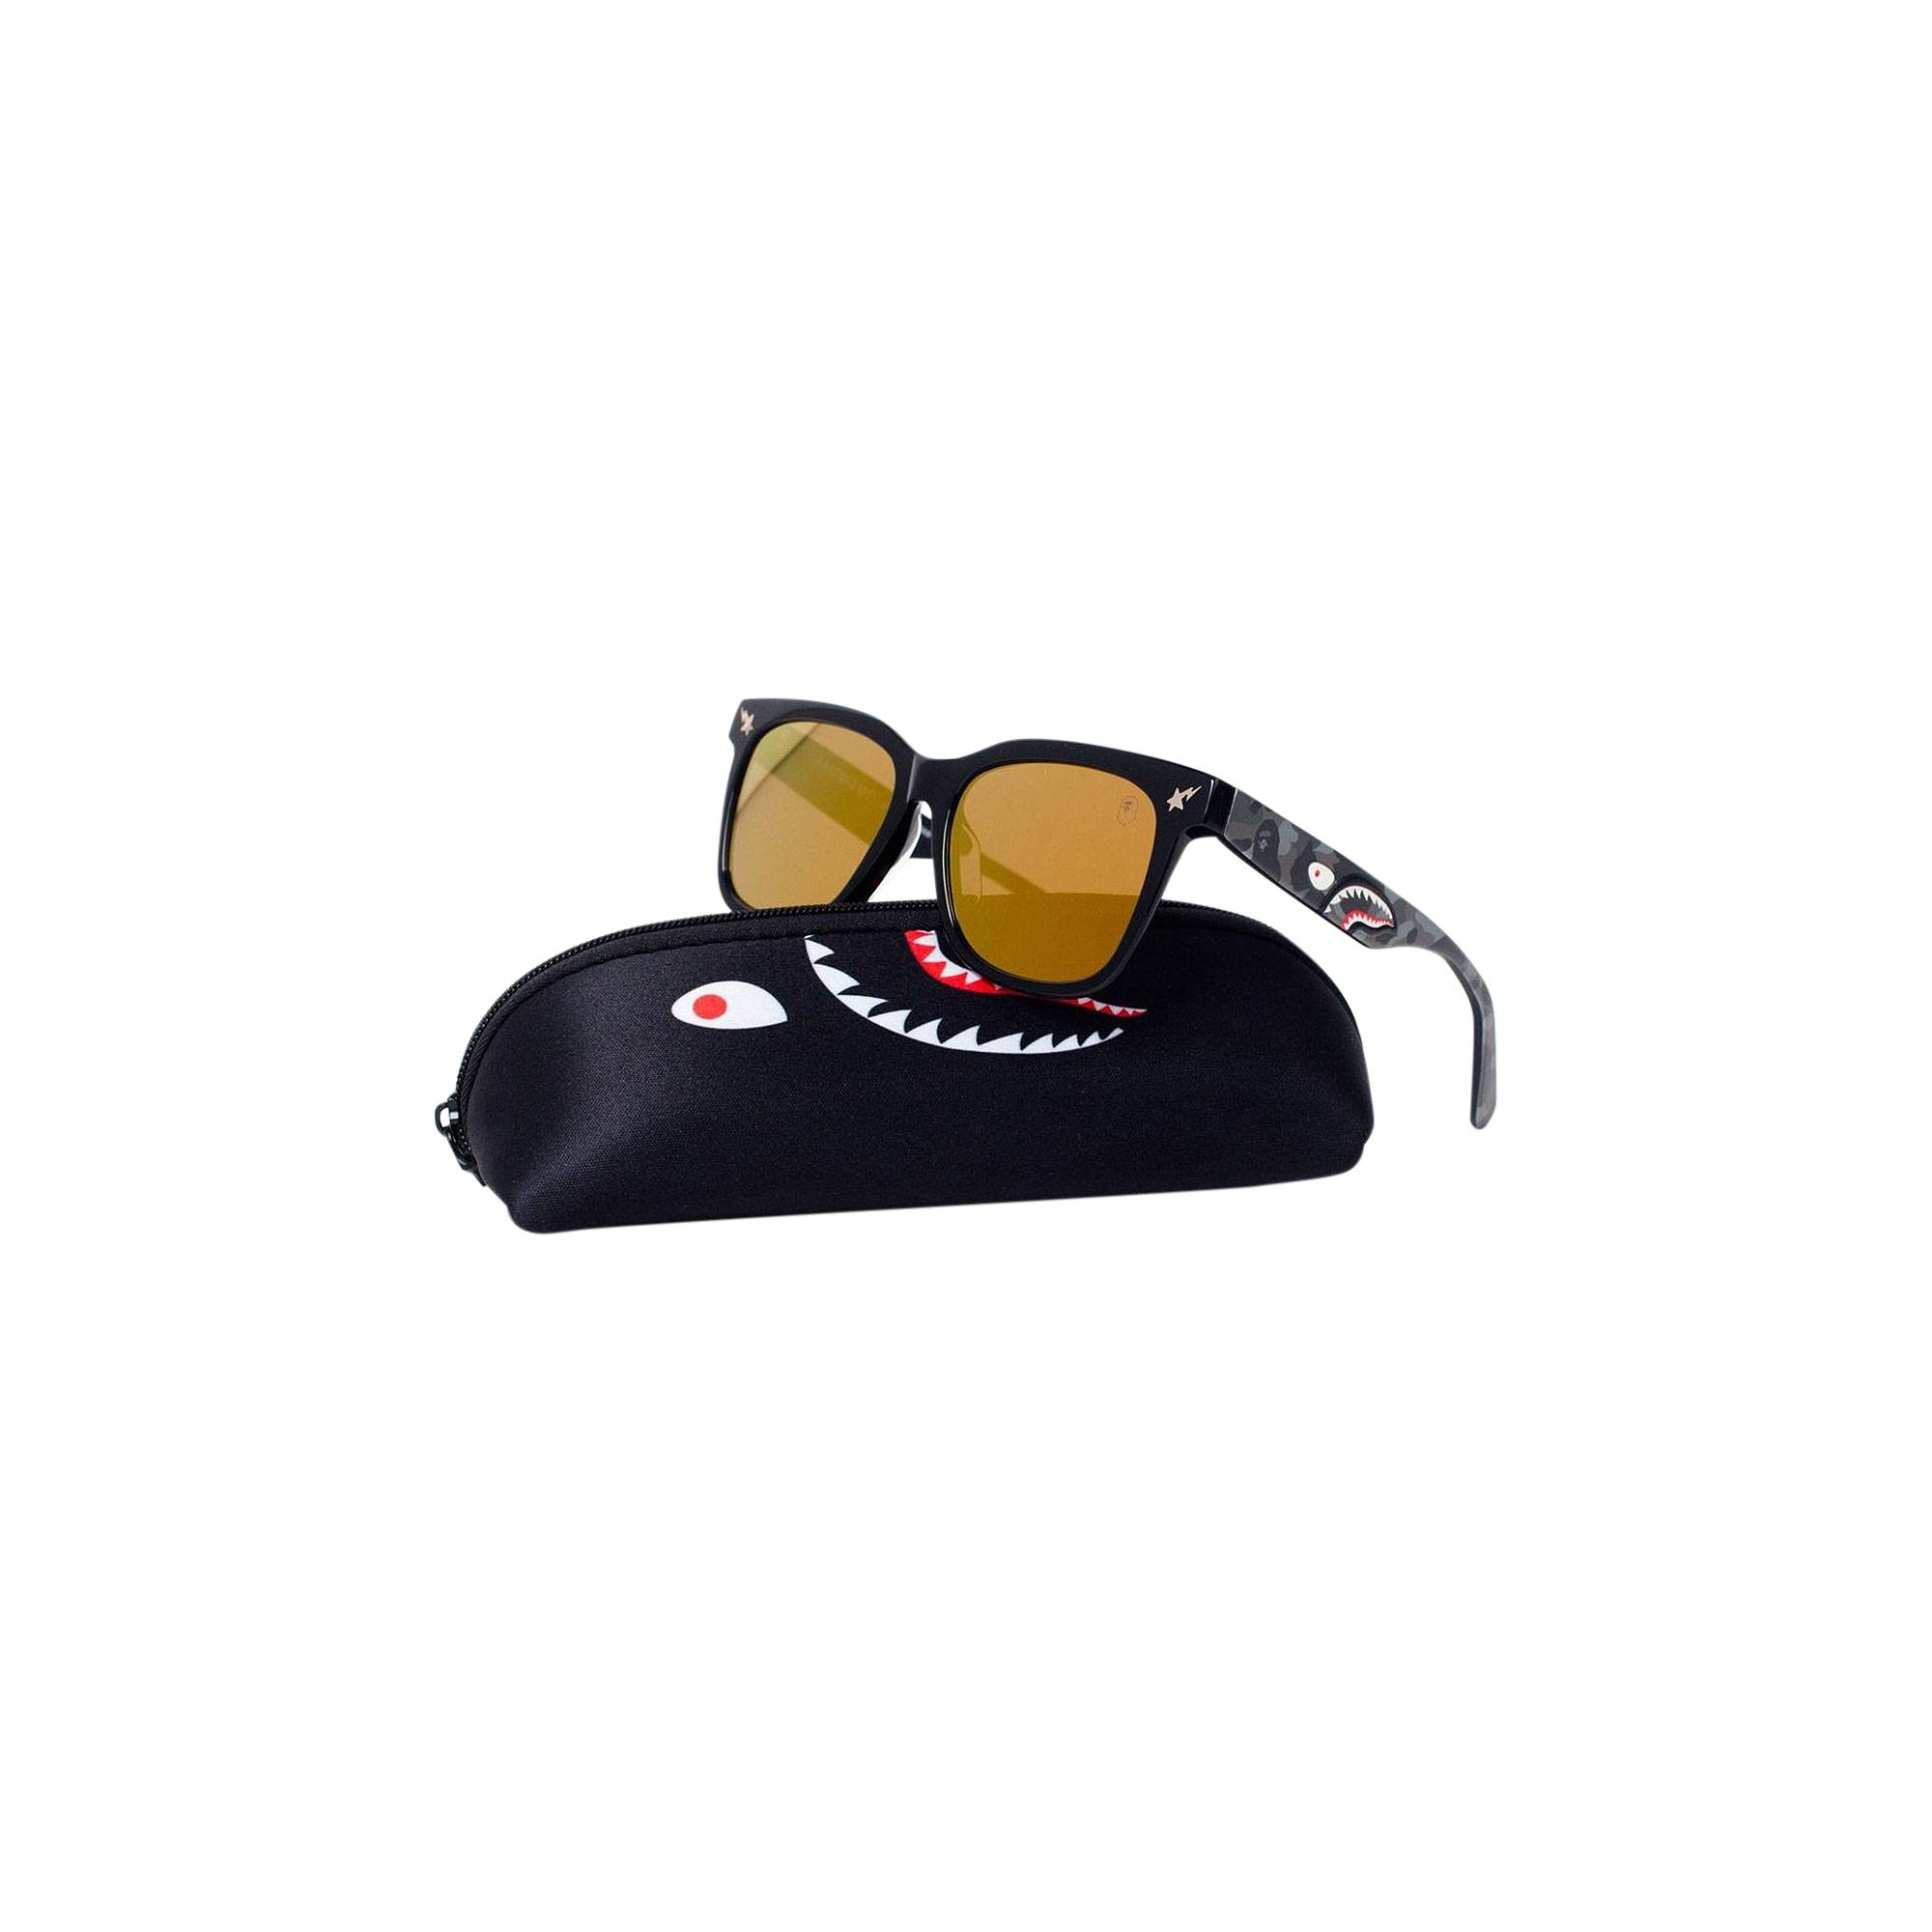 BAPE Sunglasses 'Black' - 2